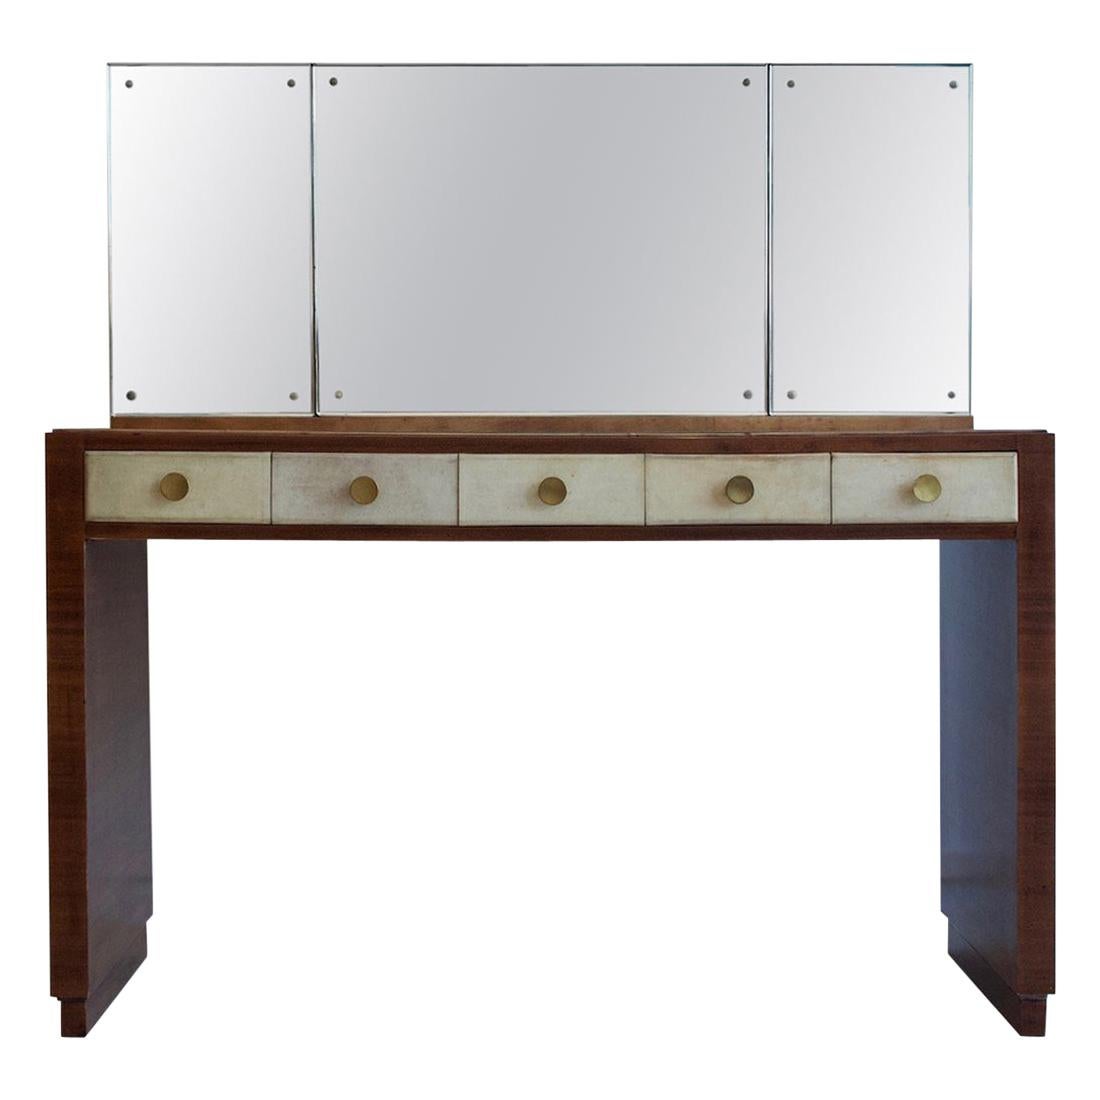 Mahogany Vanity Table with Mirror and a Stool